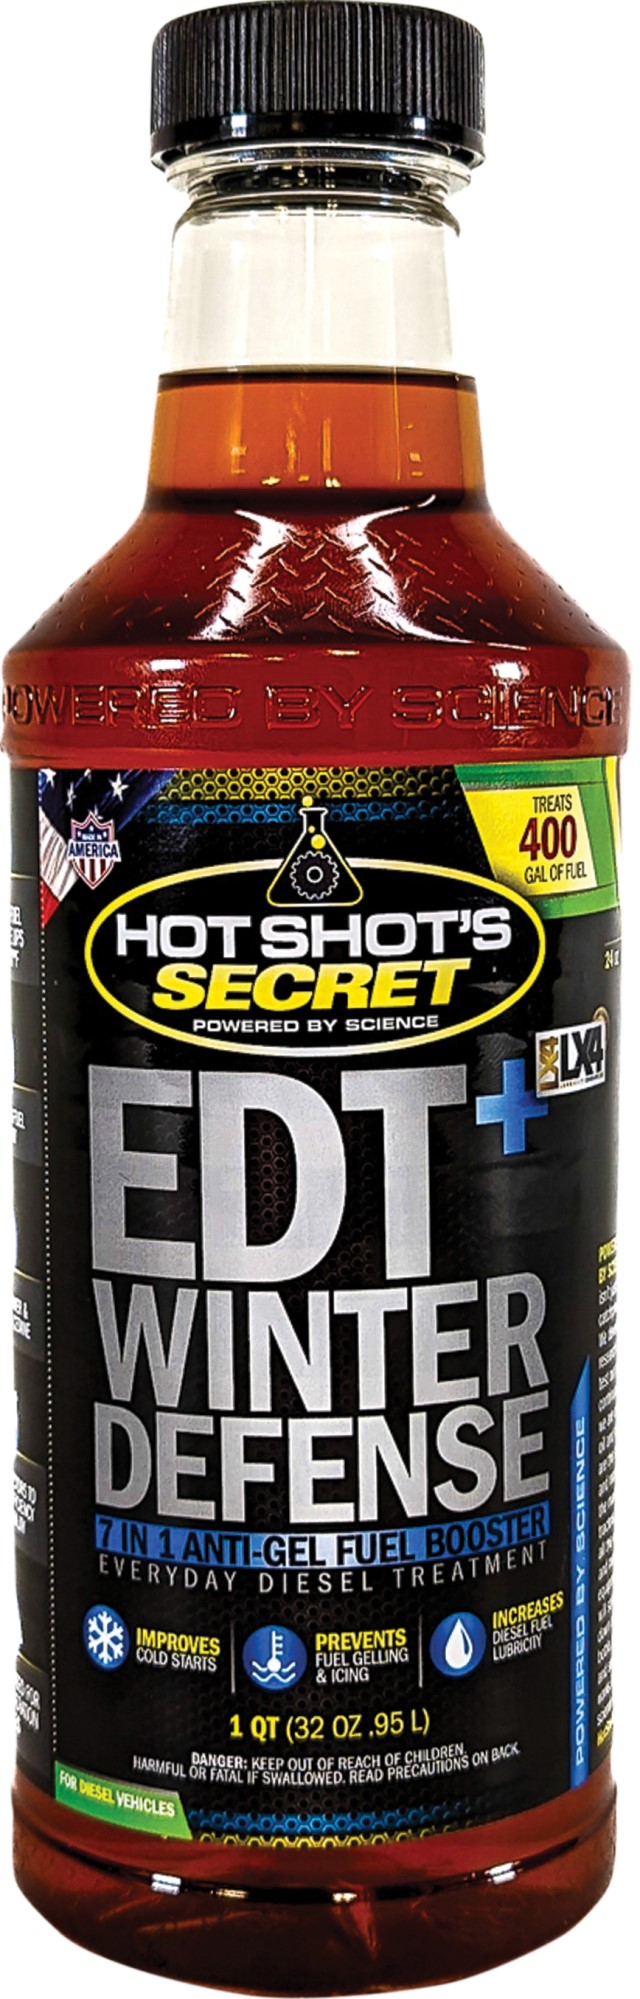 hot shots secret edt winter defense